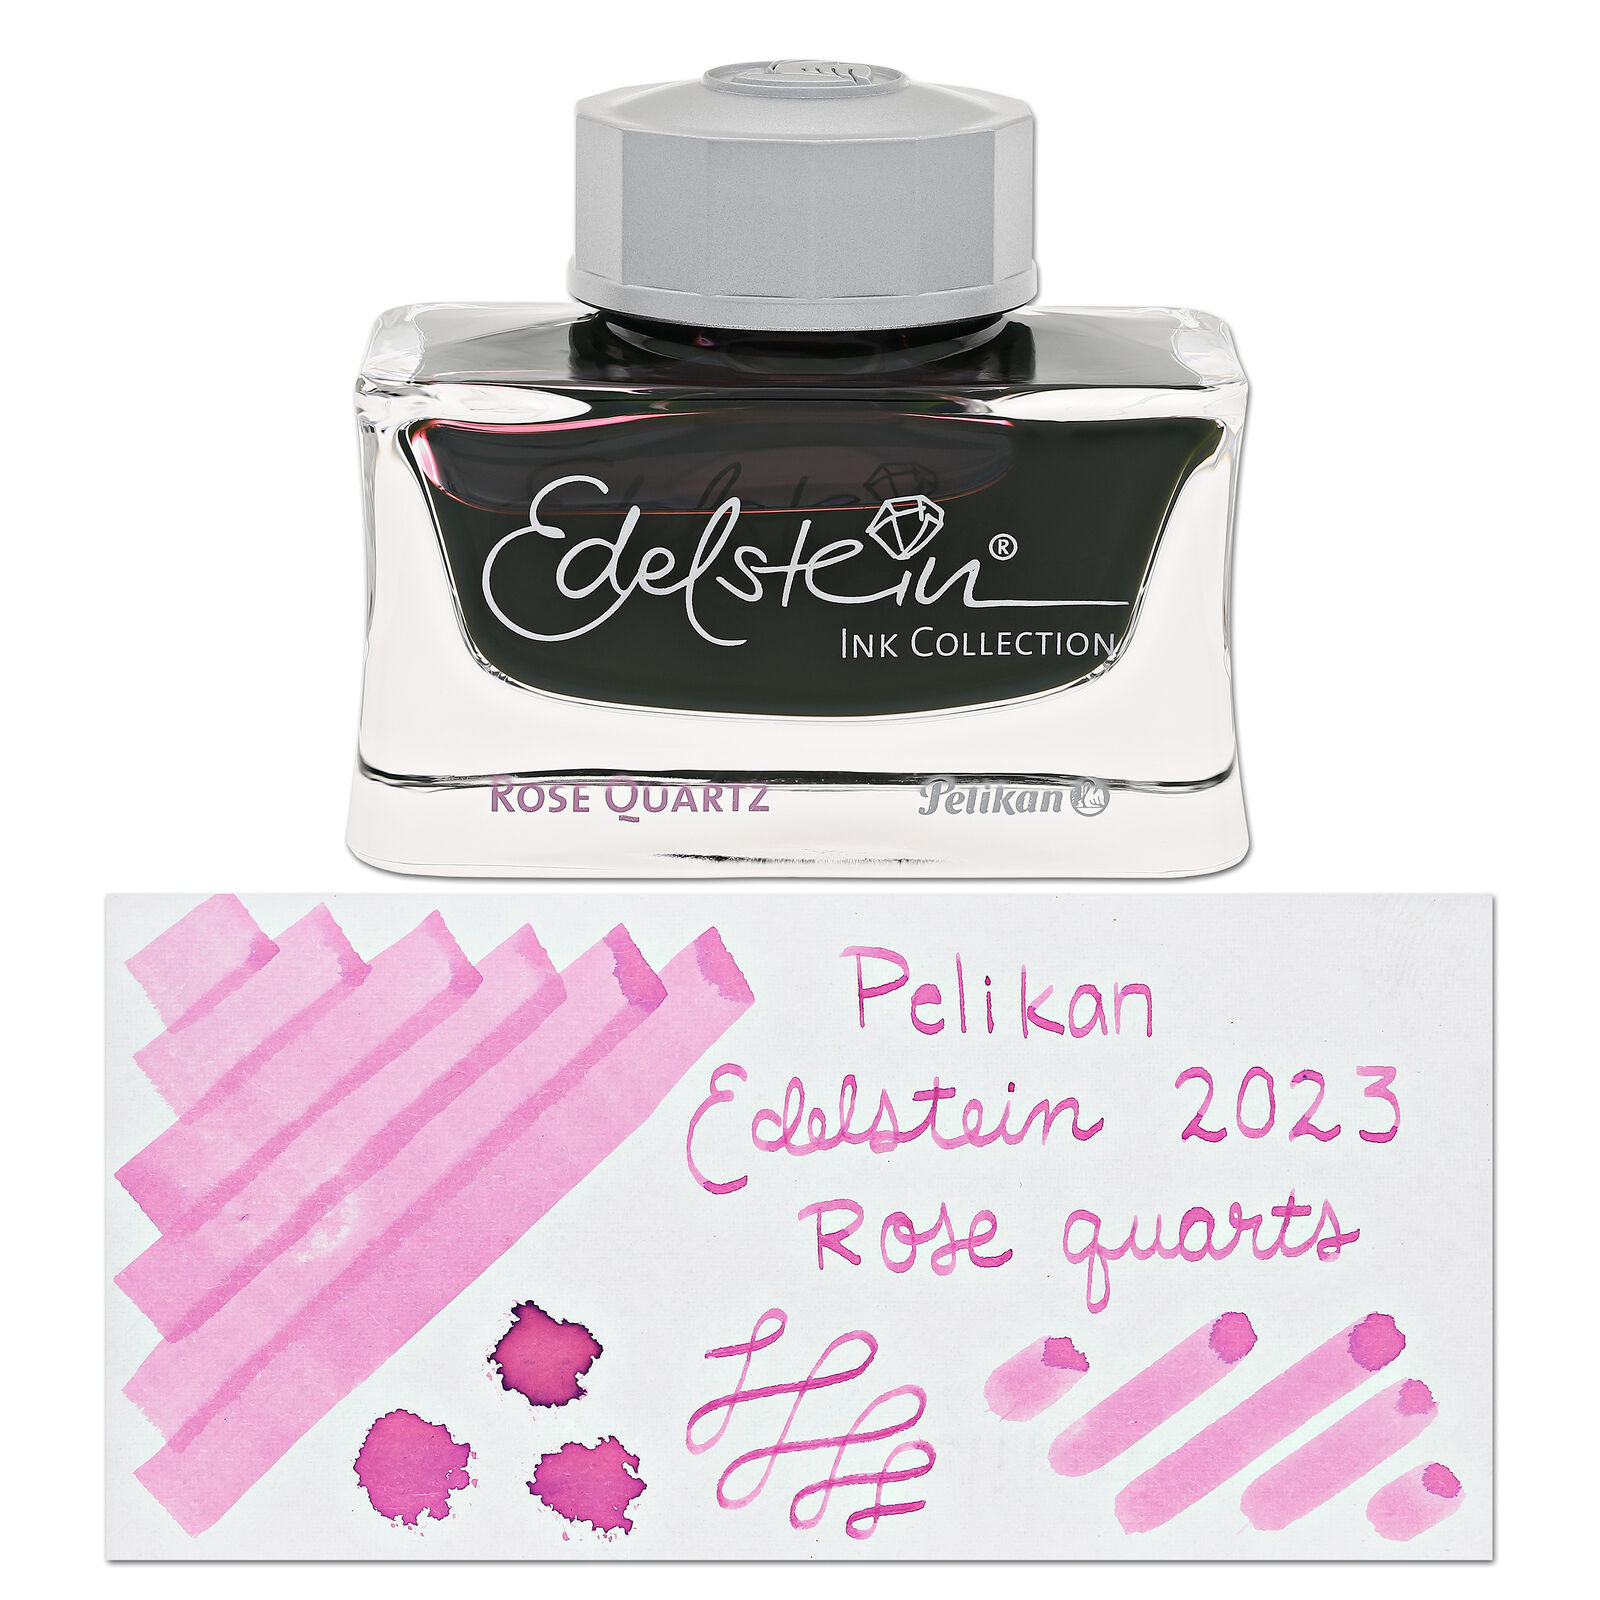 Pelikan Edelstein Bottled 50ml Ink in Rose Quartz - Ink of the Year 2023